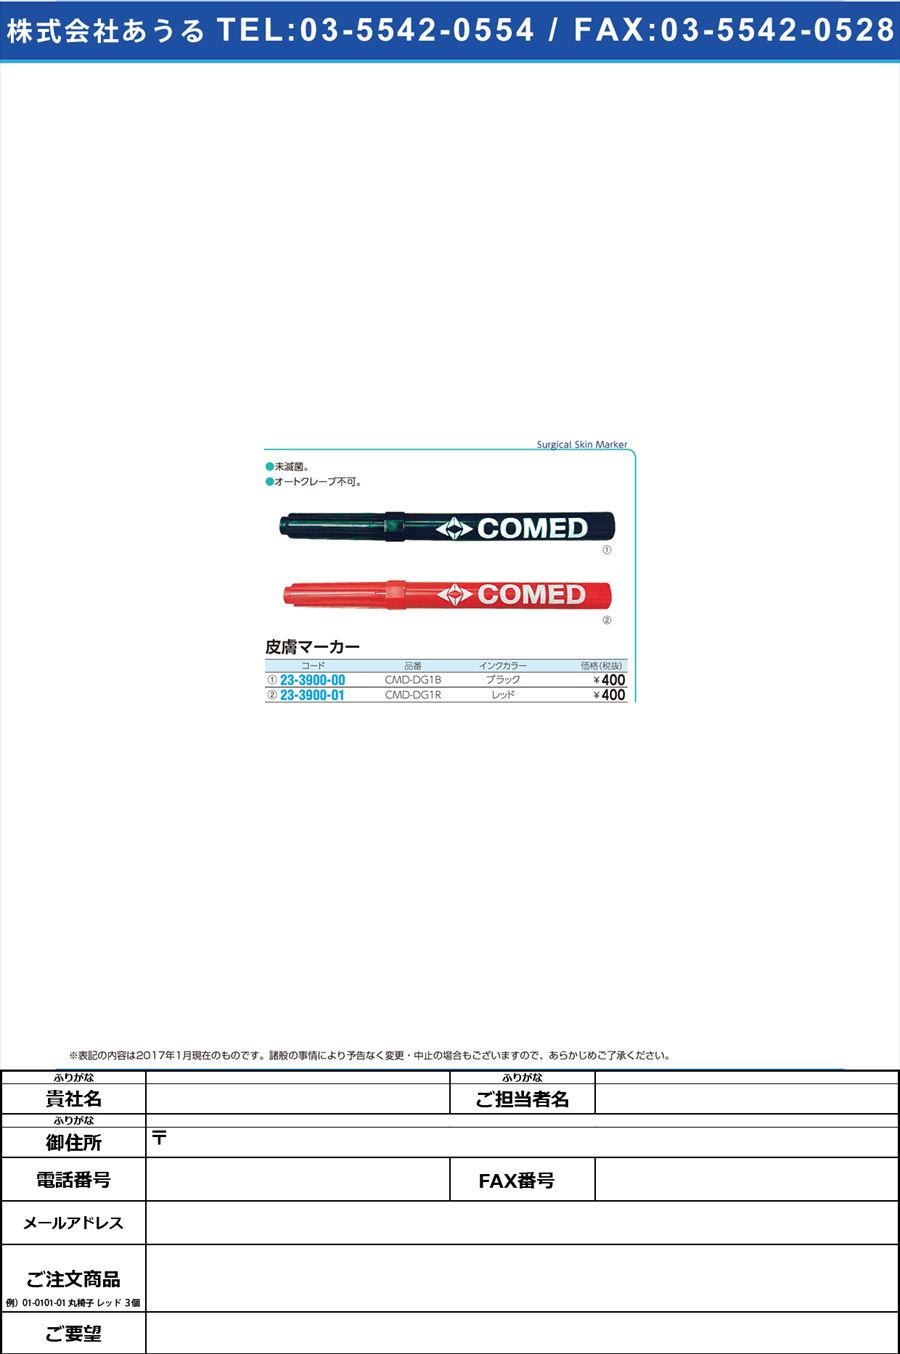 皮膚マーカー ﾋﾌﾏｰｶｰ CMD-DG1R(ﾚｯﾄﾞ)(23-3900-01)